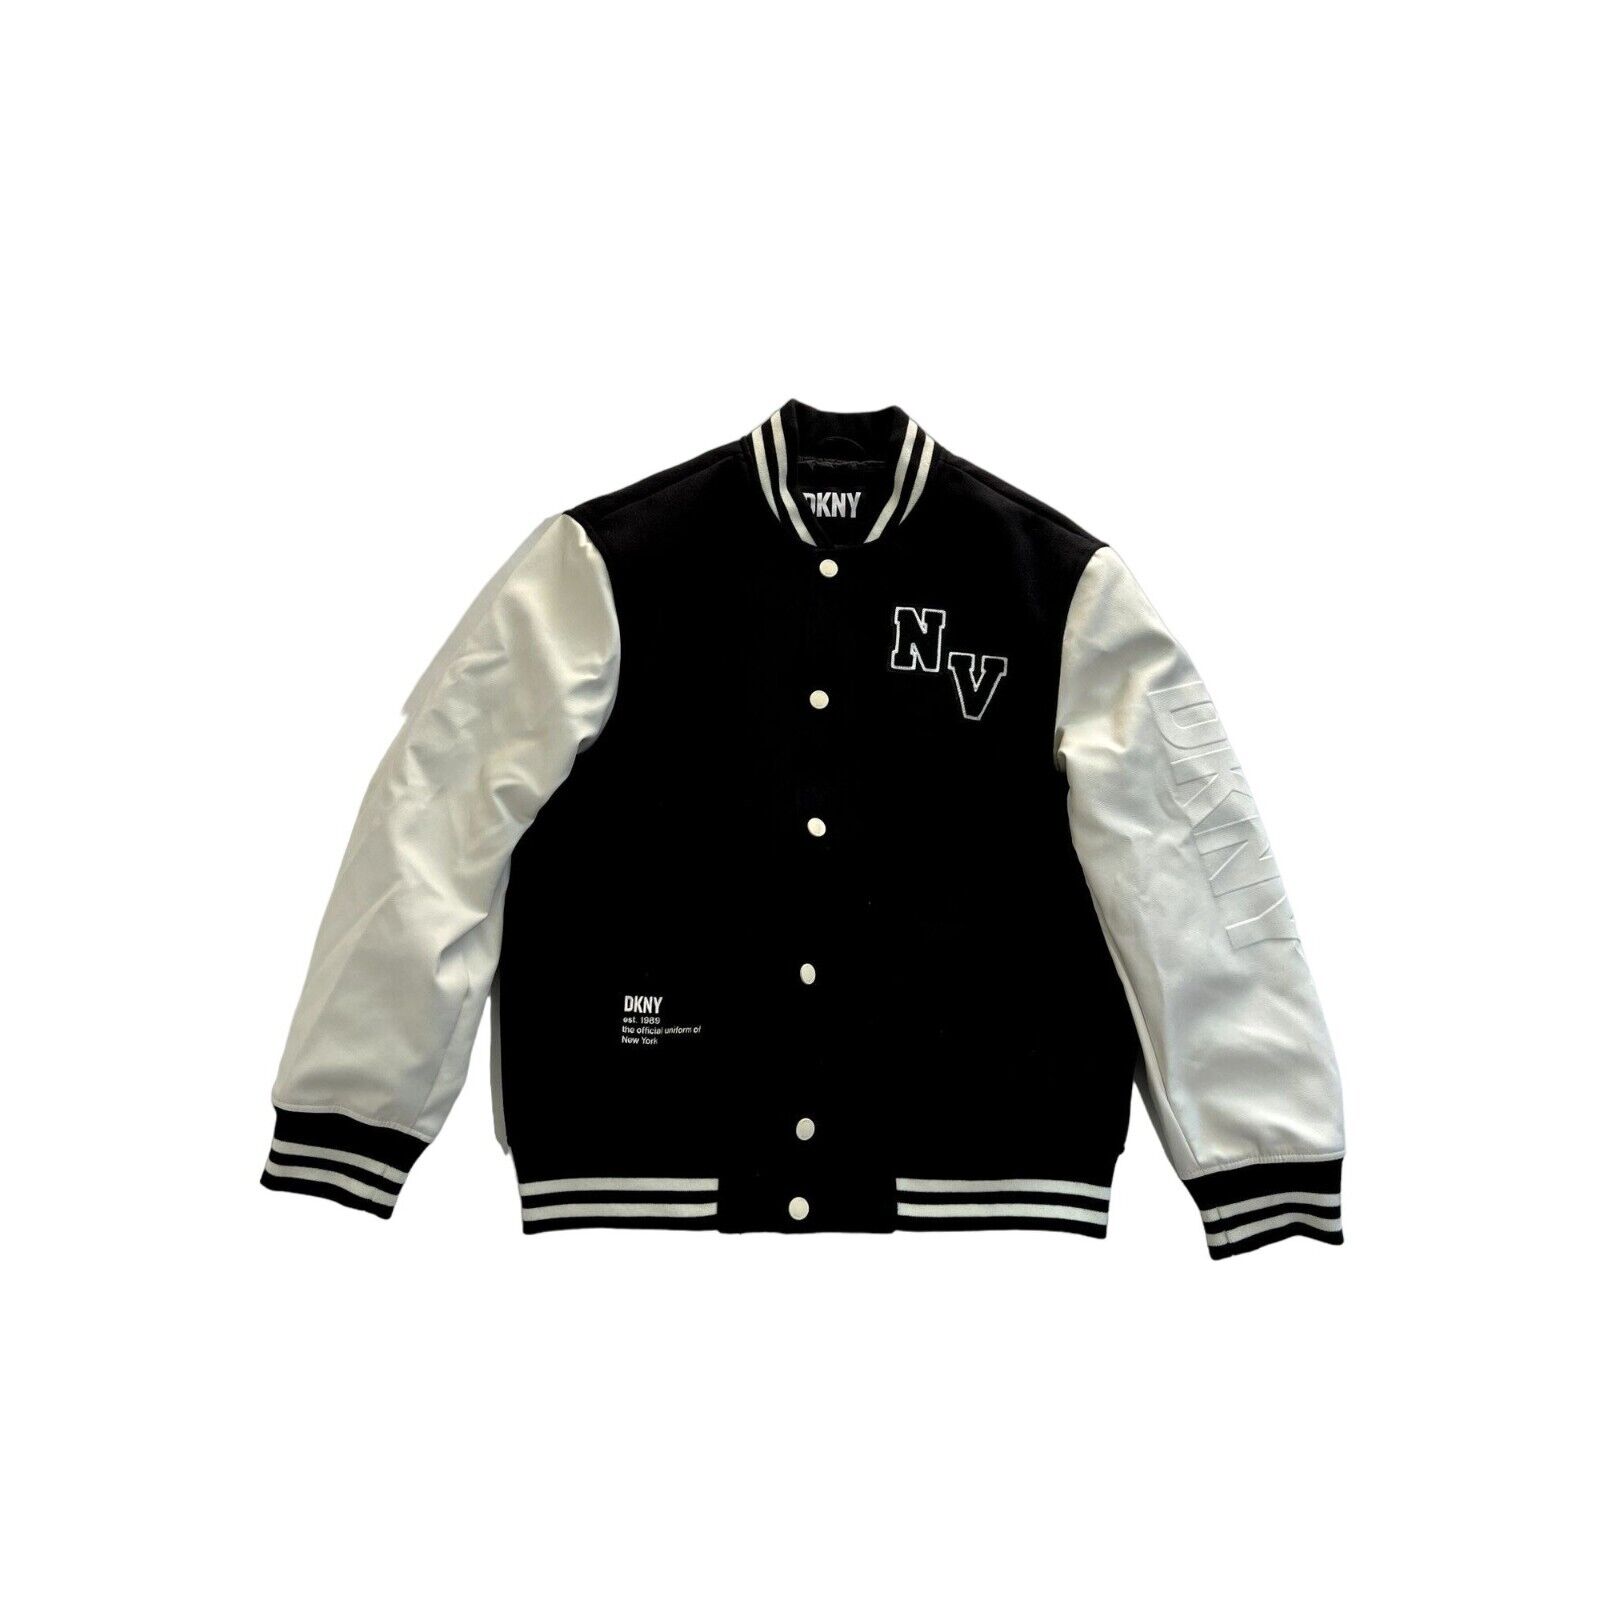 DKNY Classic Varsity Jacket in Black White - image 1